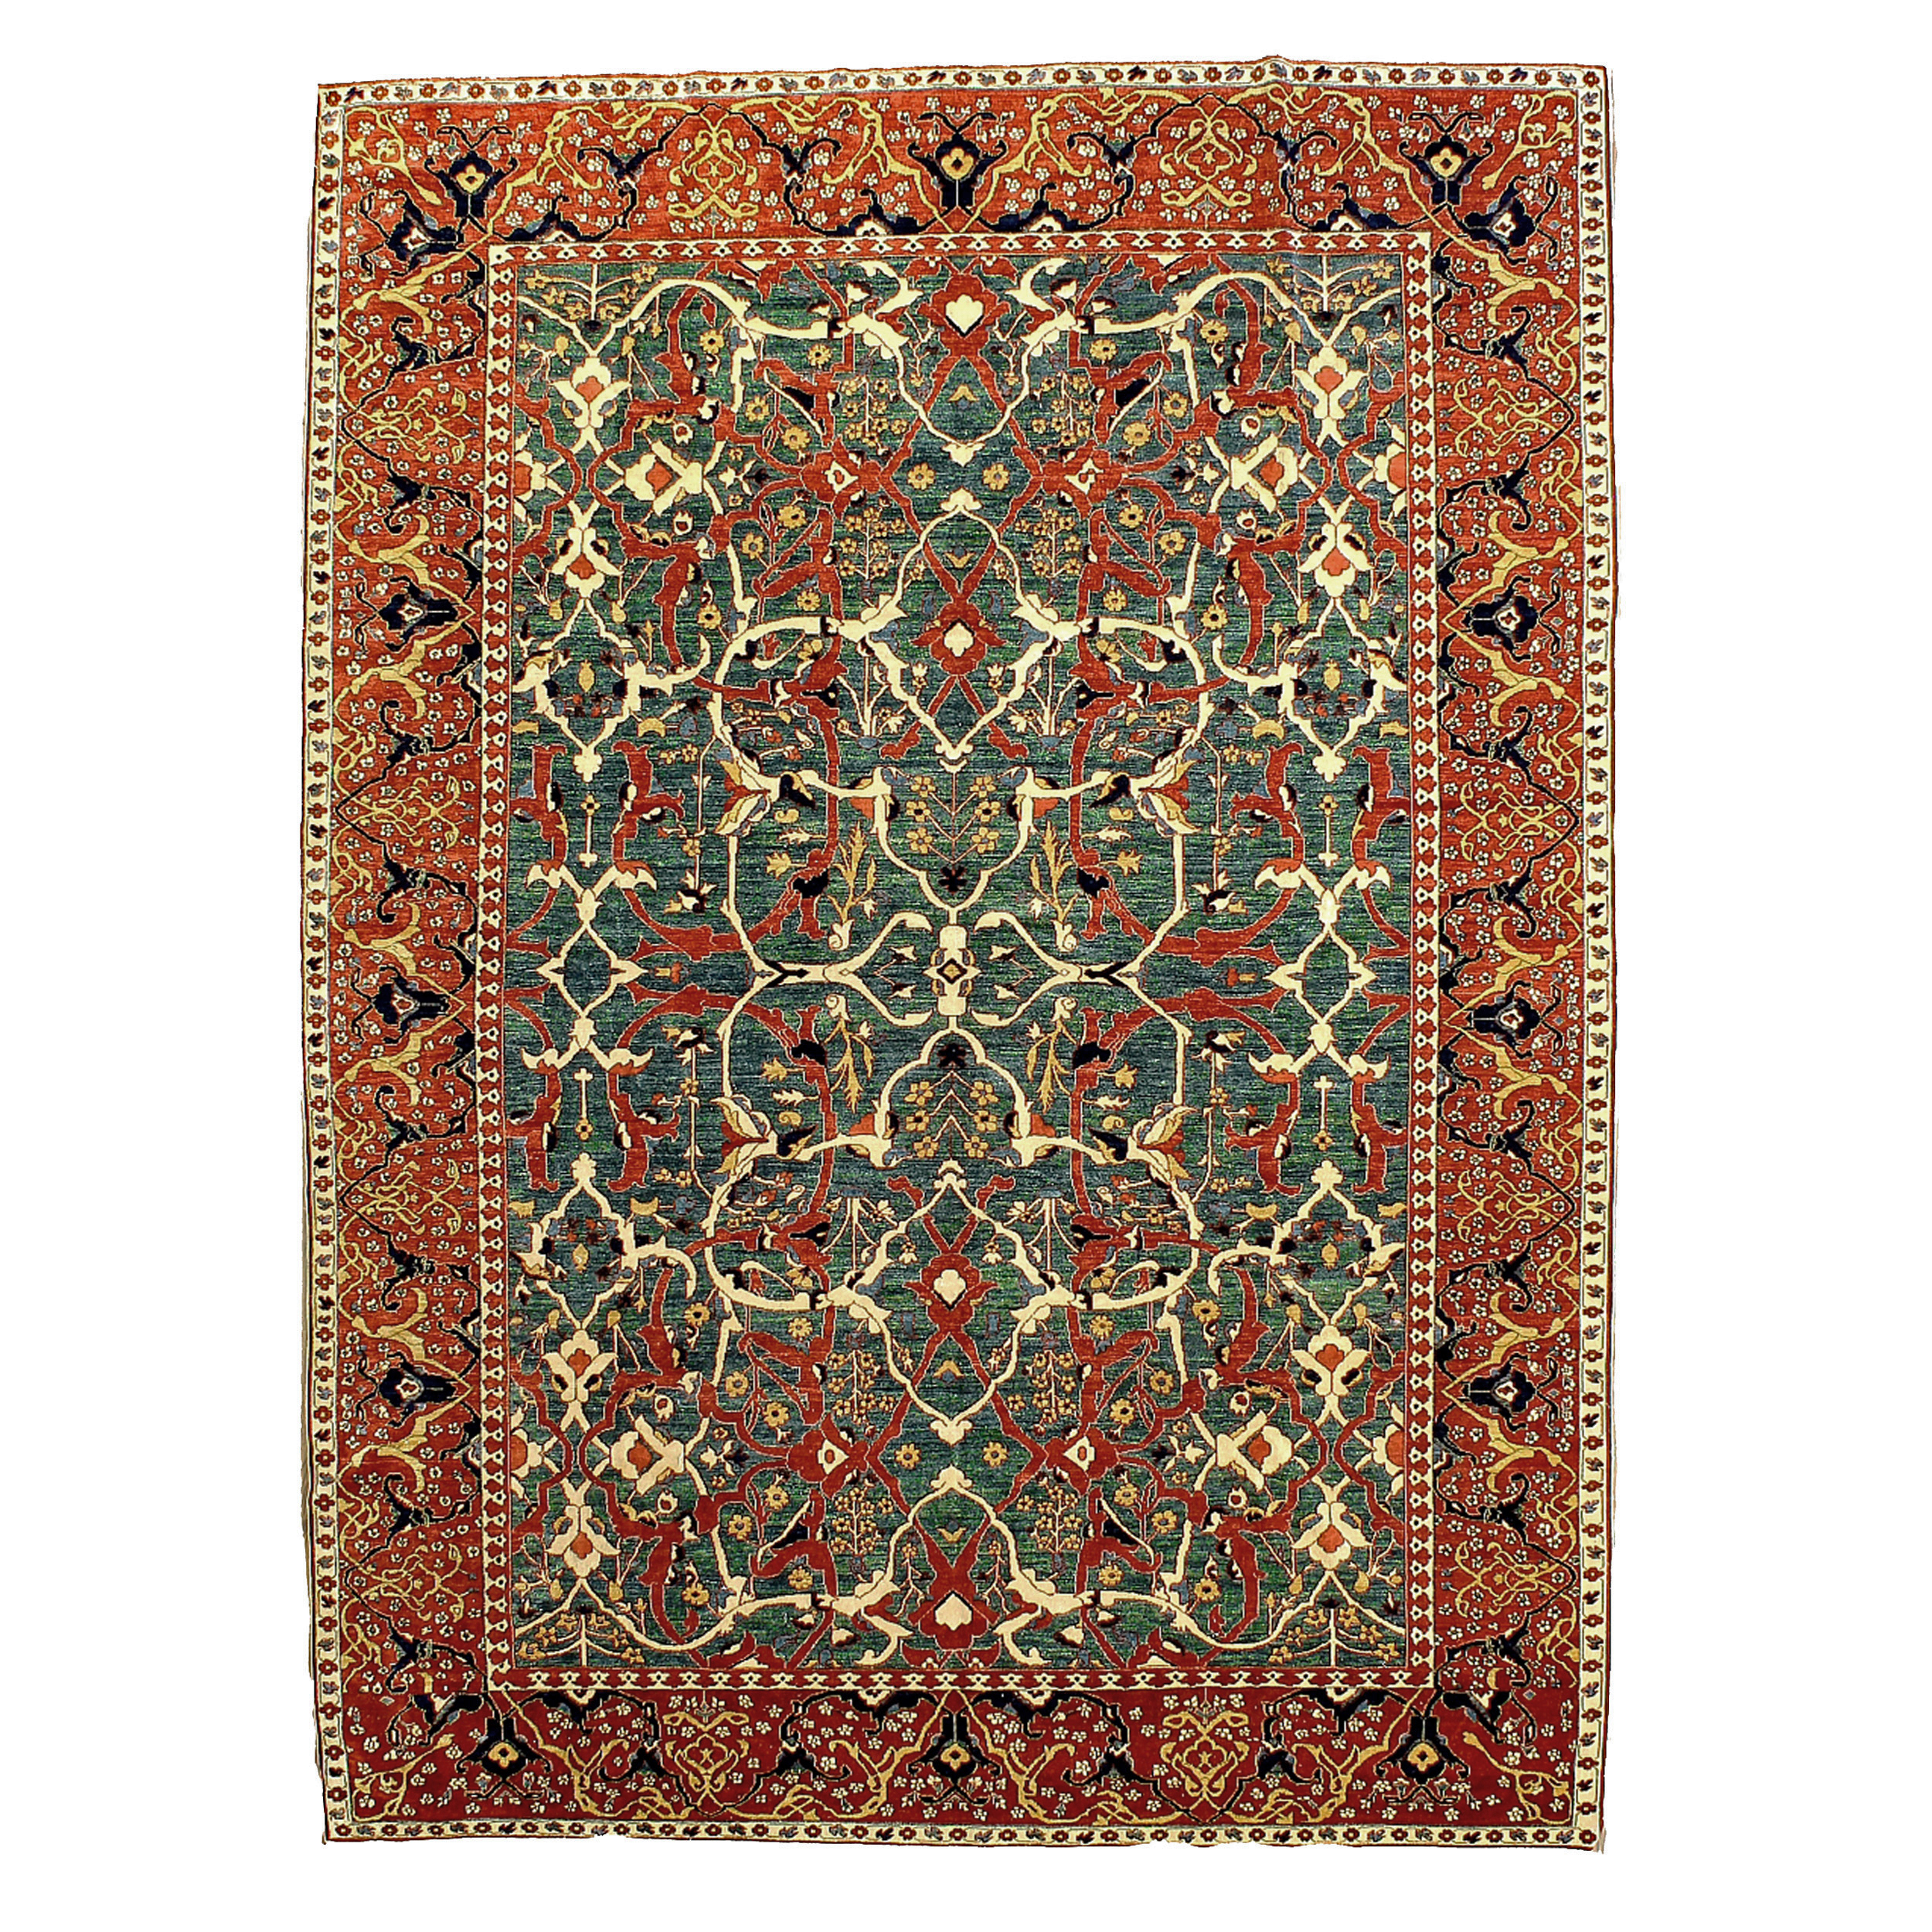 New Split Arabesque design carpet, hand woven in Azerbaijan, Douglas Stock Gallery, hand woven Oriental rugs Boston,MA area